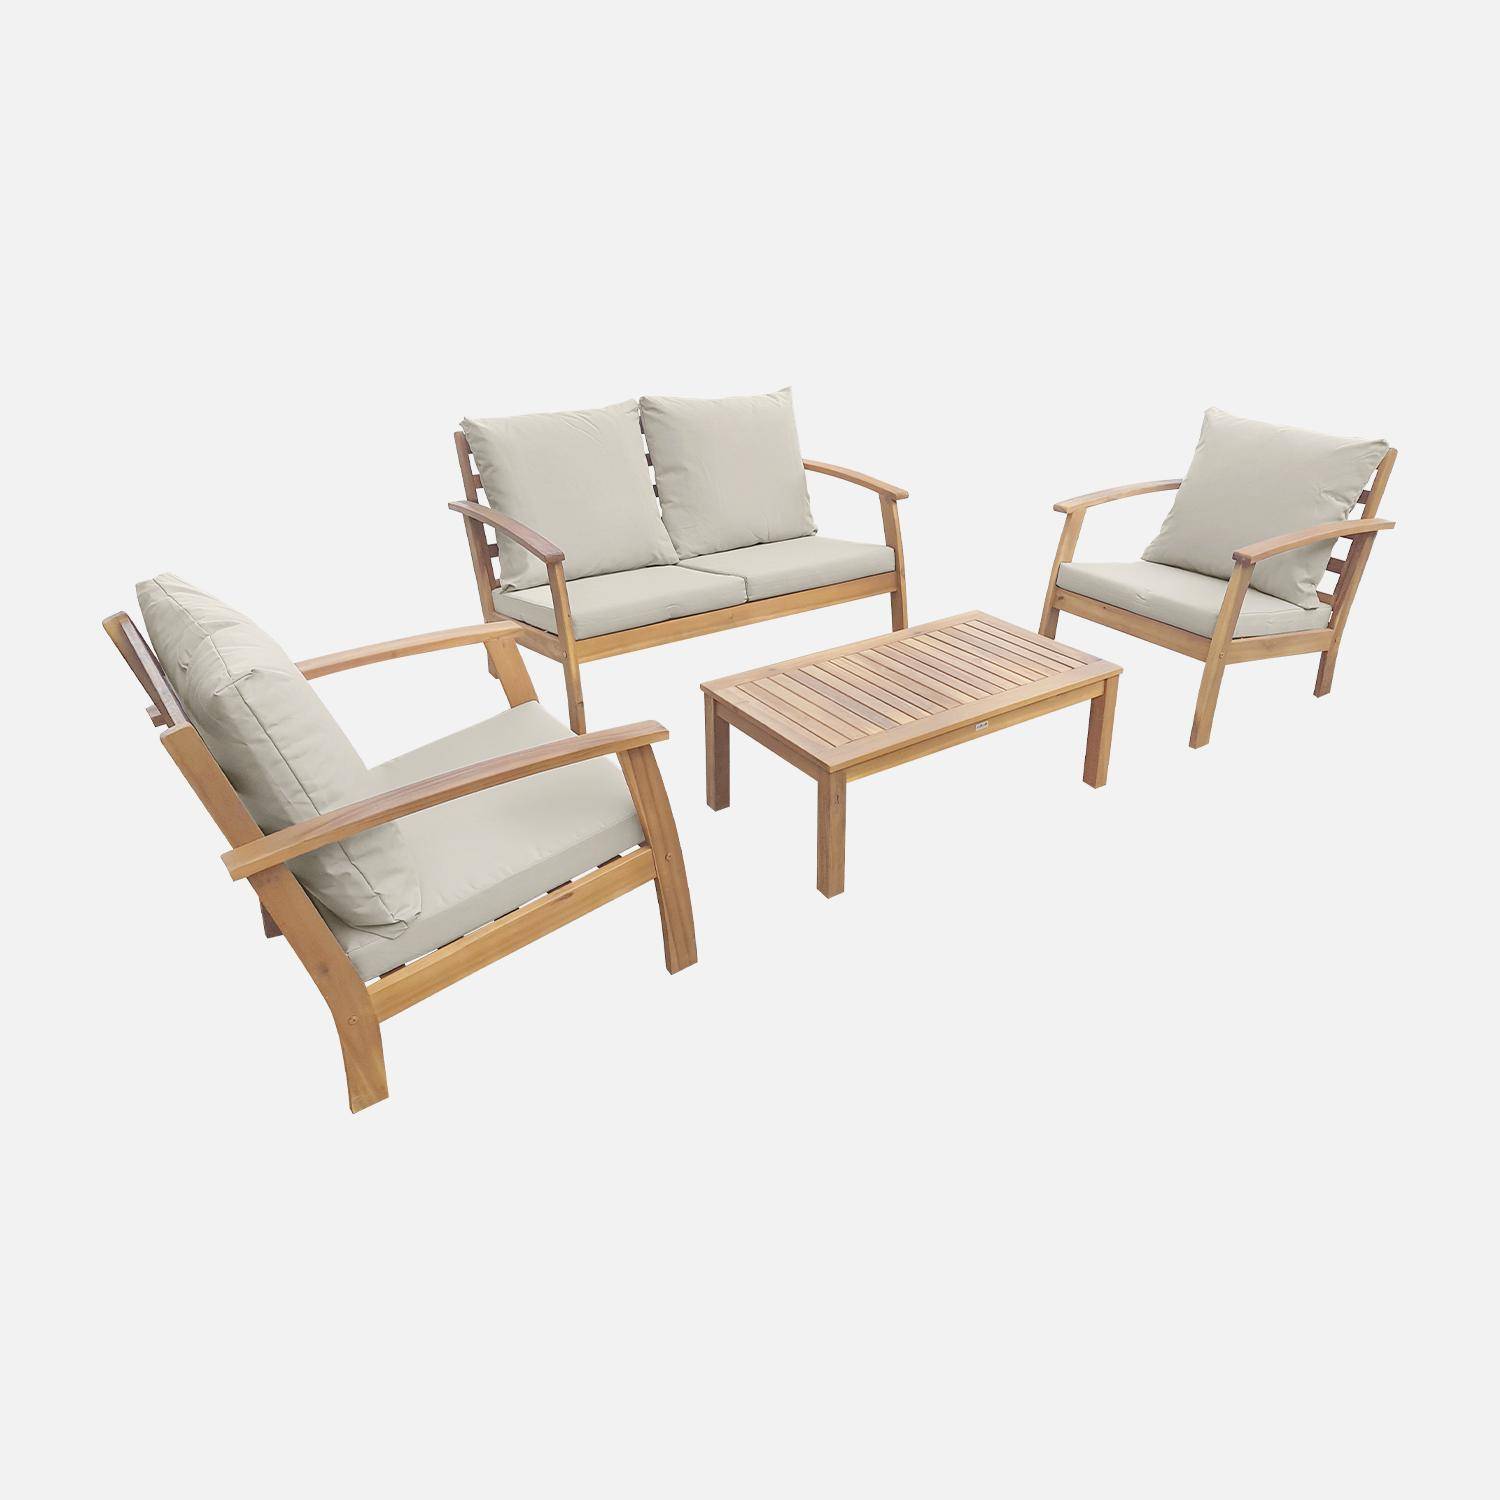 4-seater wooden garden sofa - Acacia wood sofa, armchairs and coffee table, designer piece  - Ushuaia - Off-white Photo2